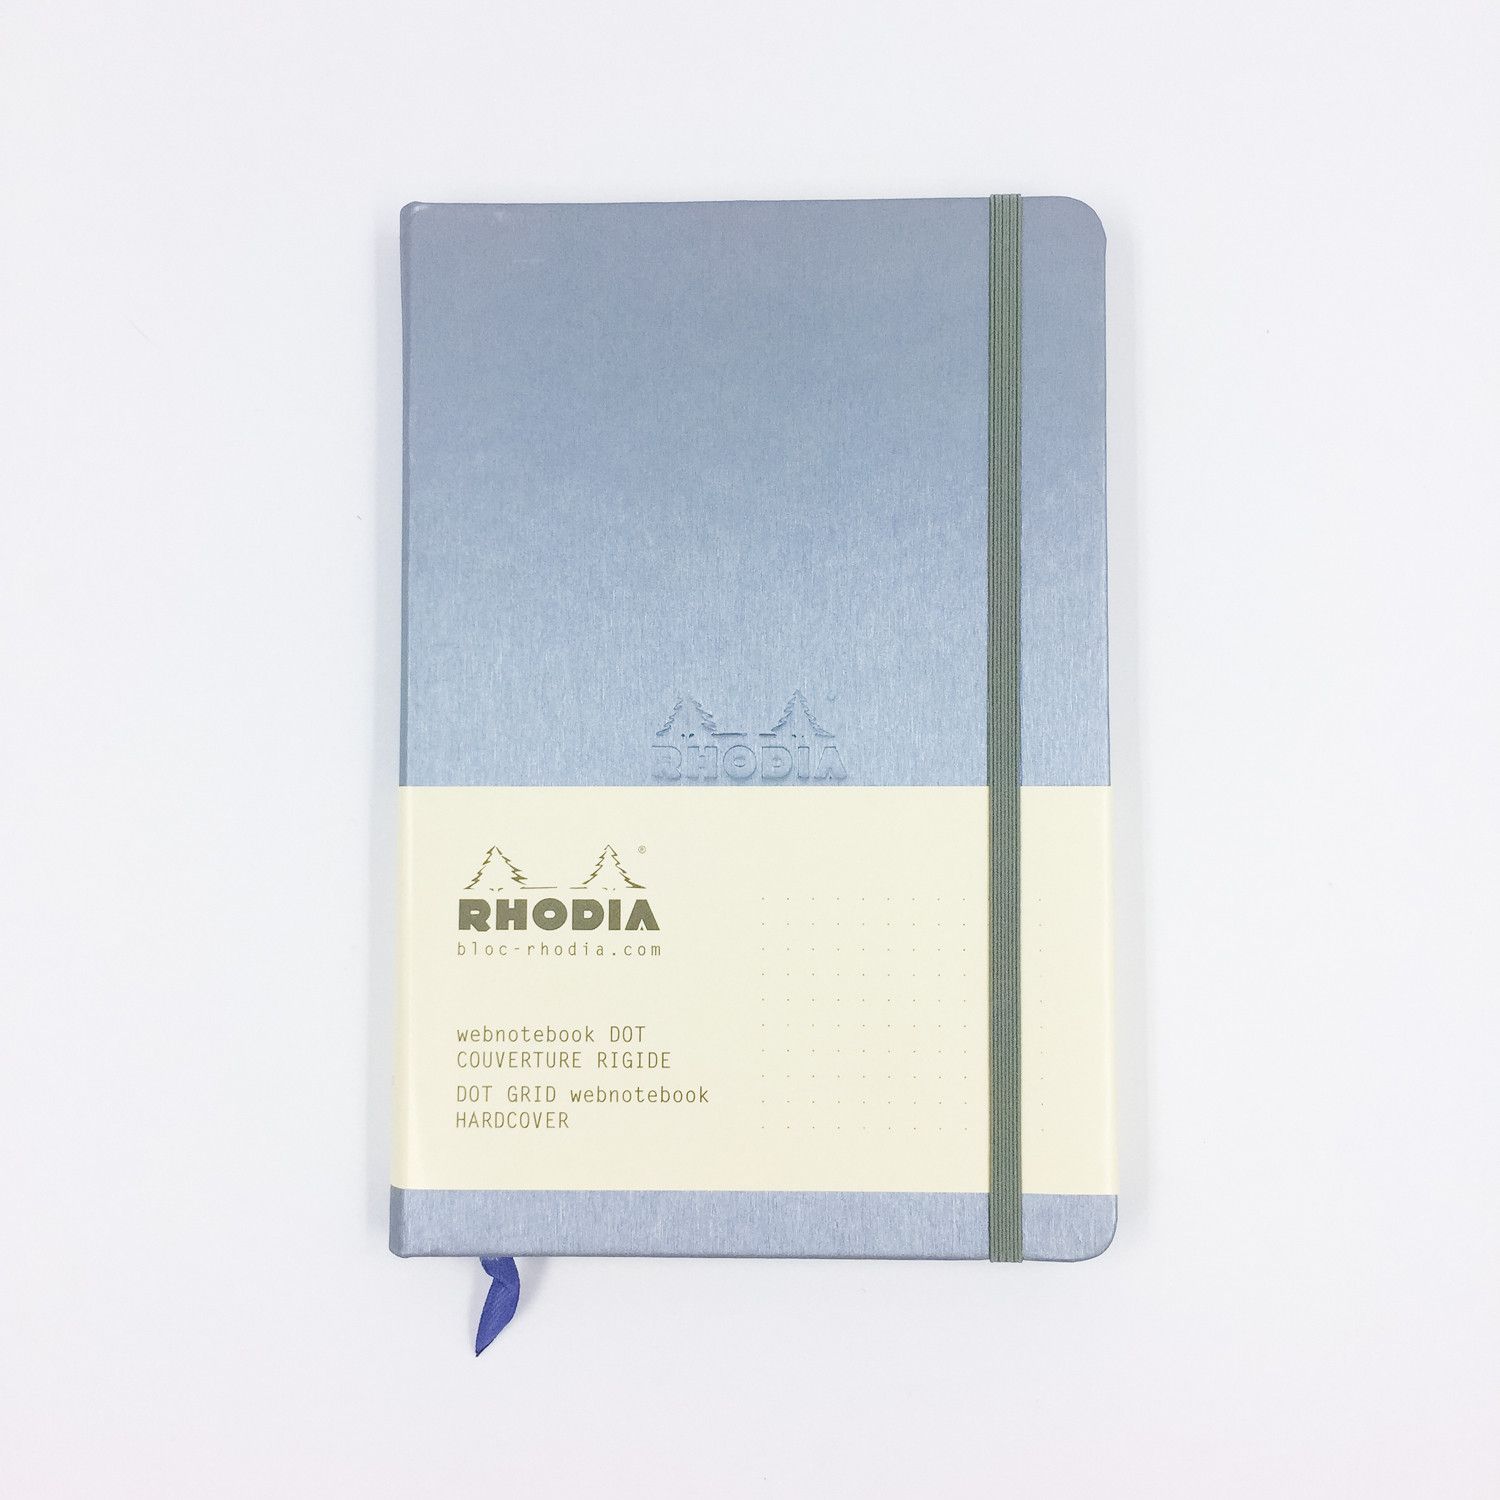 Rhodia Webnotebook, carnet pointillés, couverture rigide